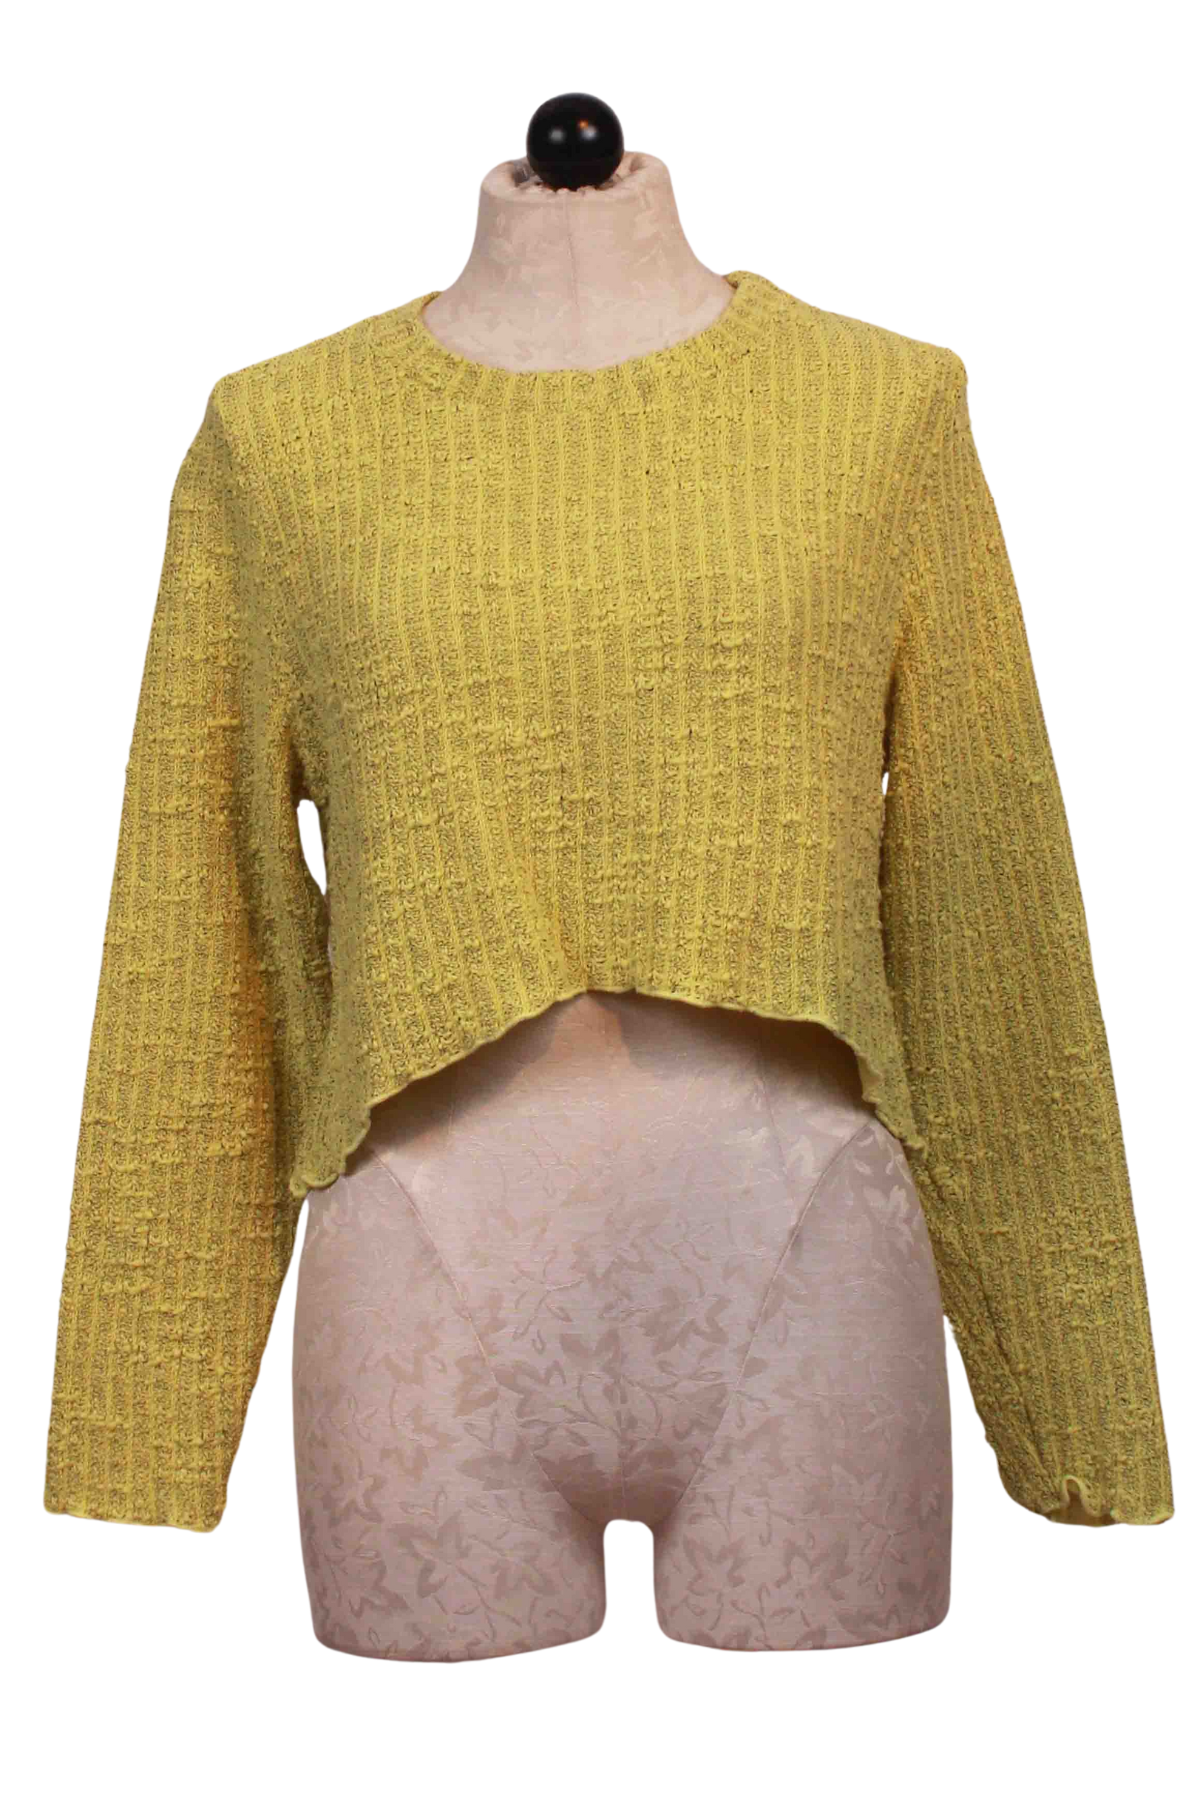 Sunburst Curved Crop Sweater by Cut Loose